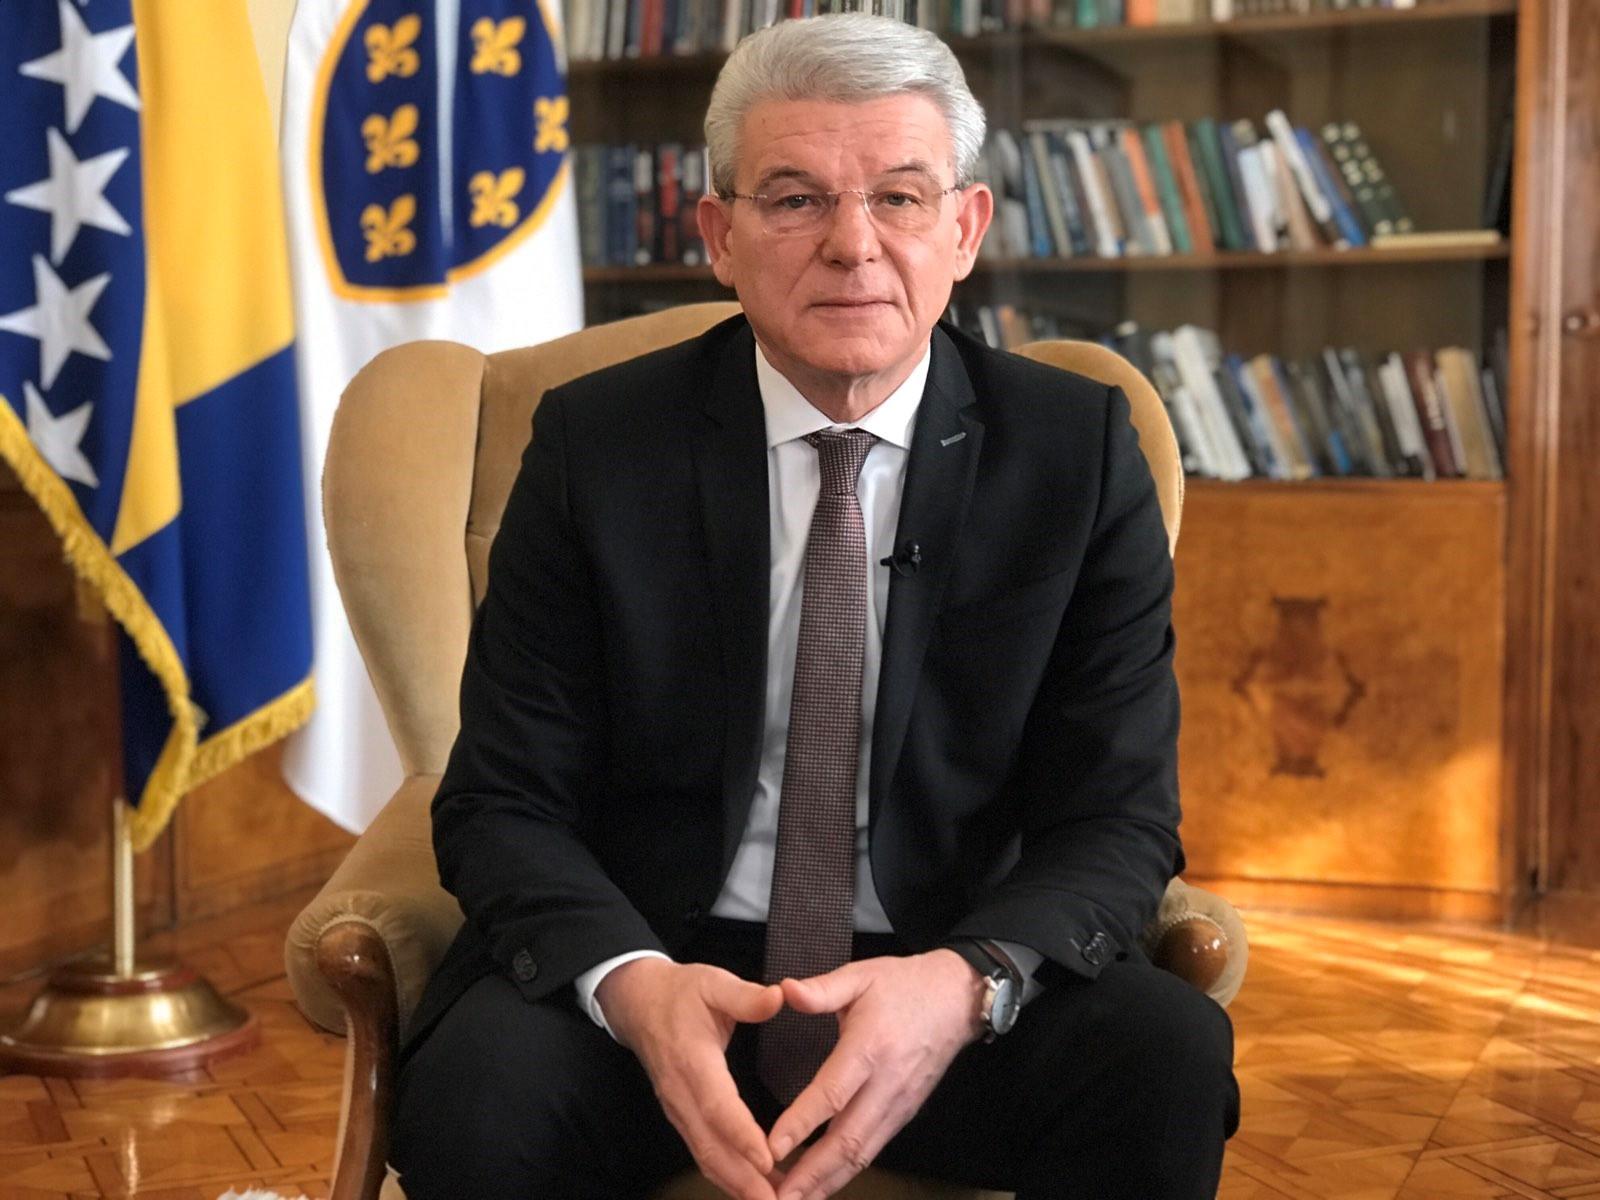 Džaferović condemns the attack on Aladža Mosque in Foča